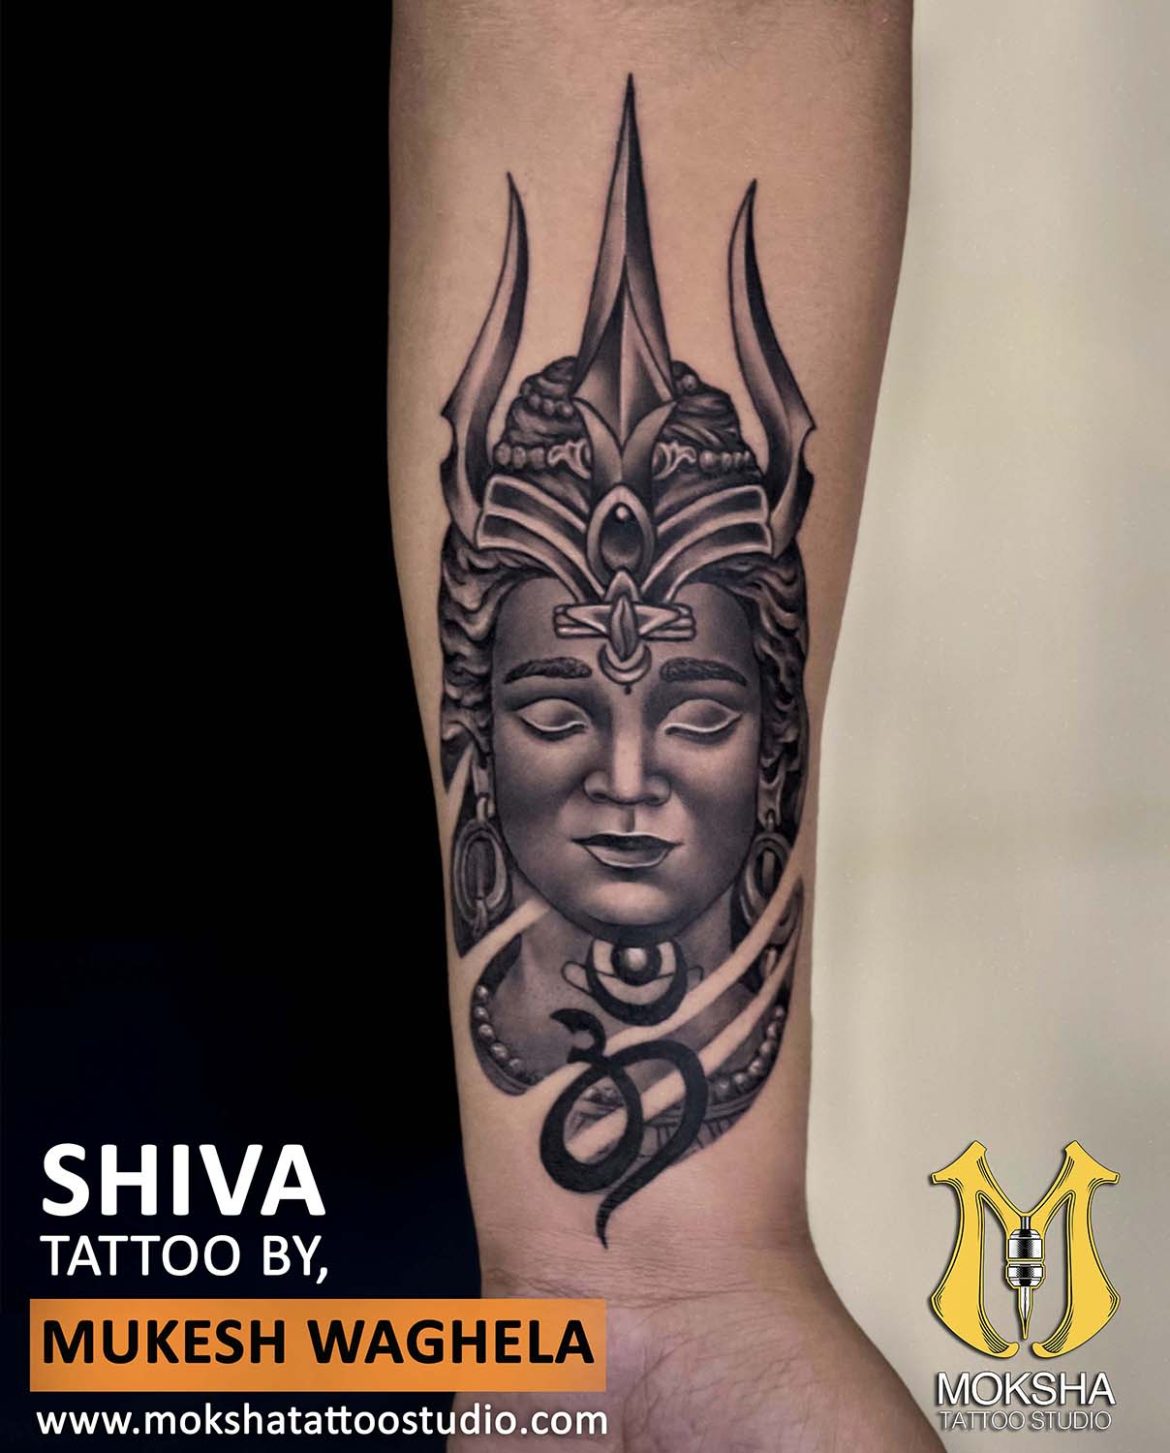 Moksha Tattoo Studio Goa India #goa #tattoo #tattootrainingindia  #tattooartist | Instagram